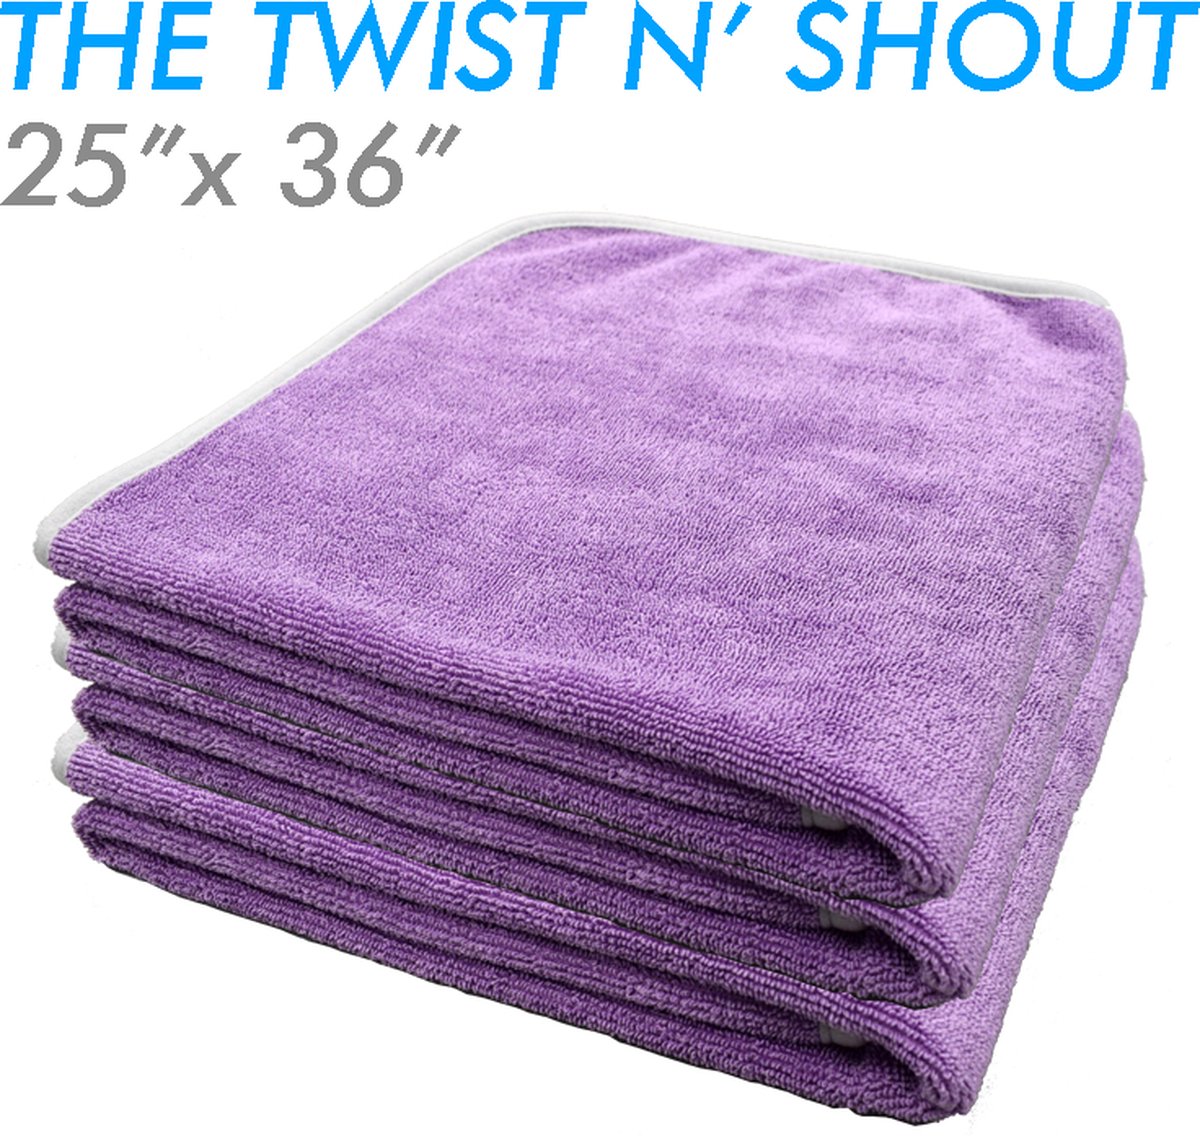 Twist n' Shout drying towel